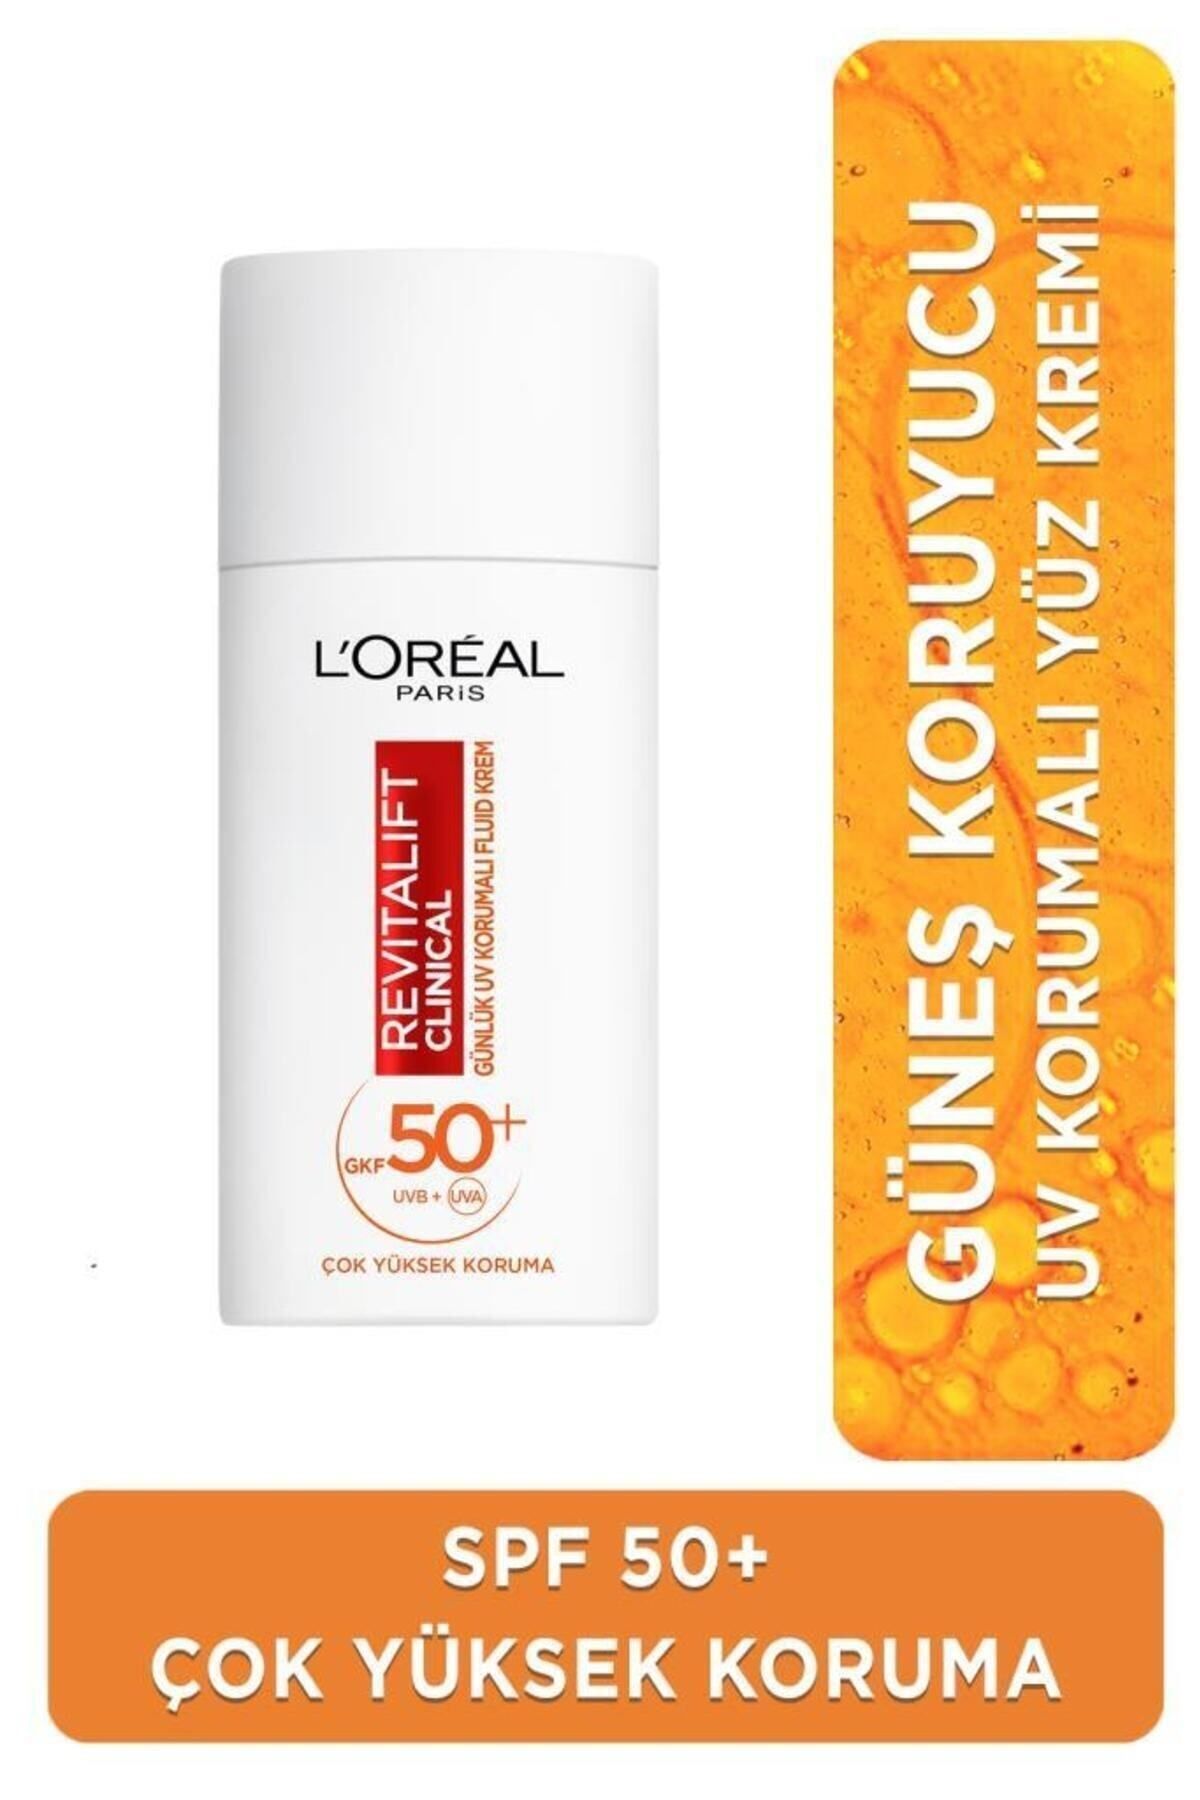 L'Oreal Paris محافظت کننده روزانه پوست با SPF 50+ و تونیک اسید گلیکولیک خالص 5% 180 میلی لیتر